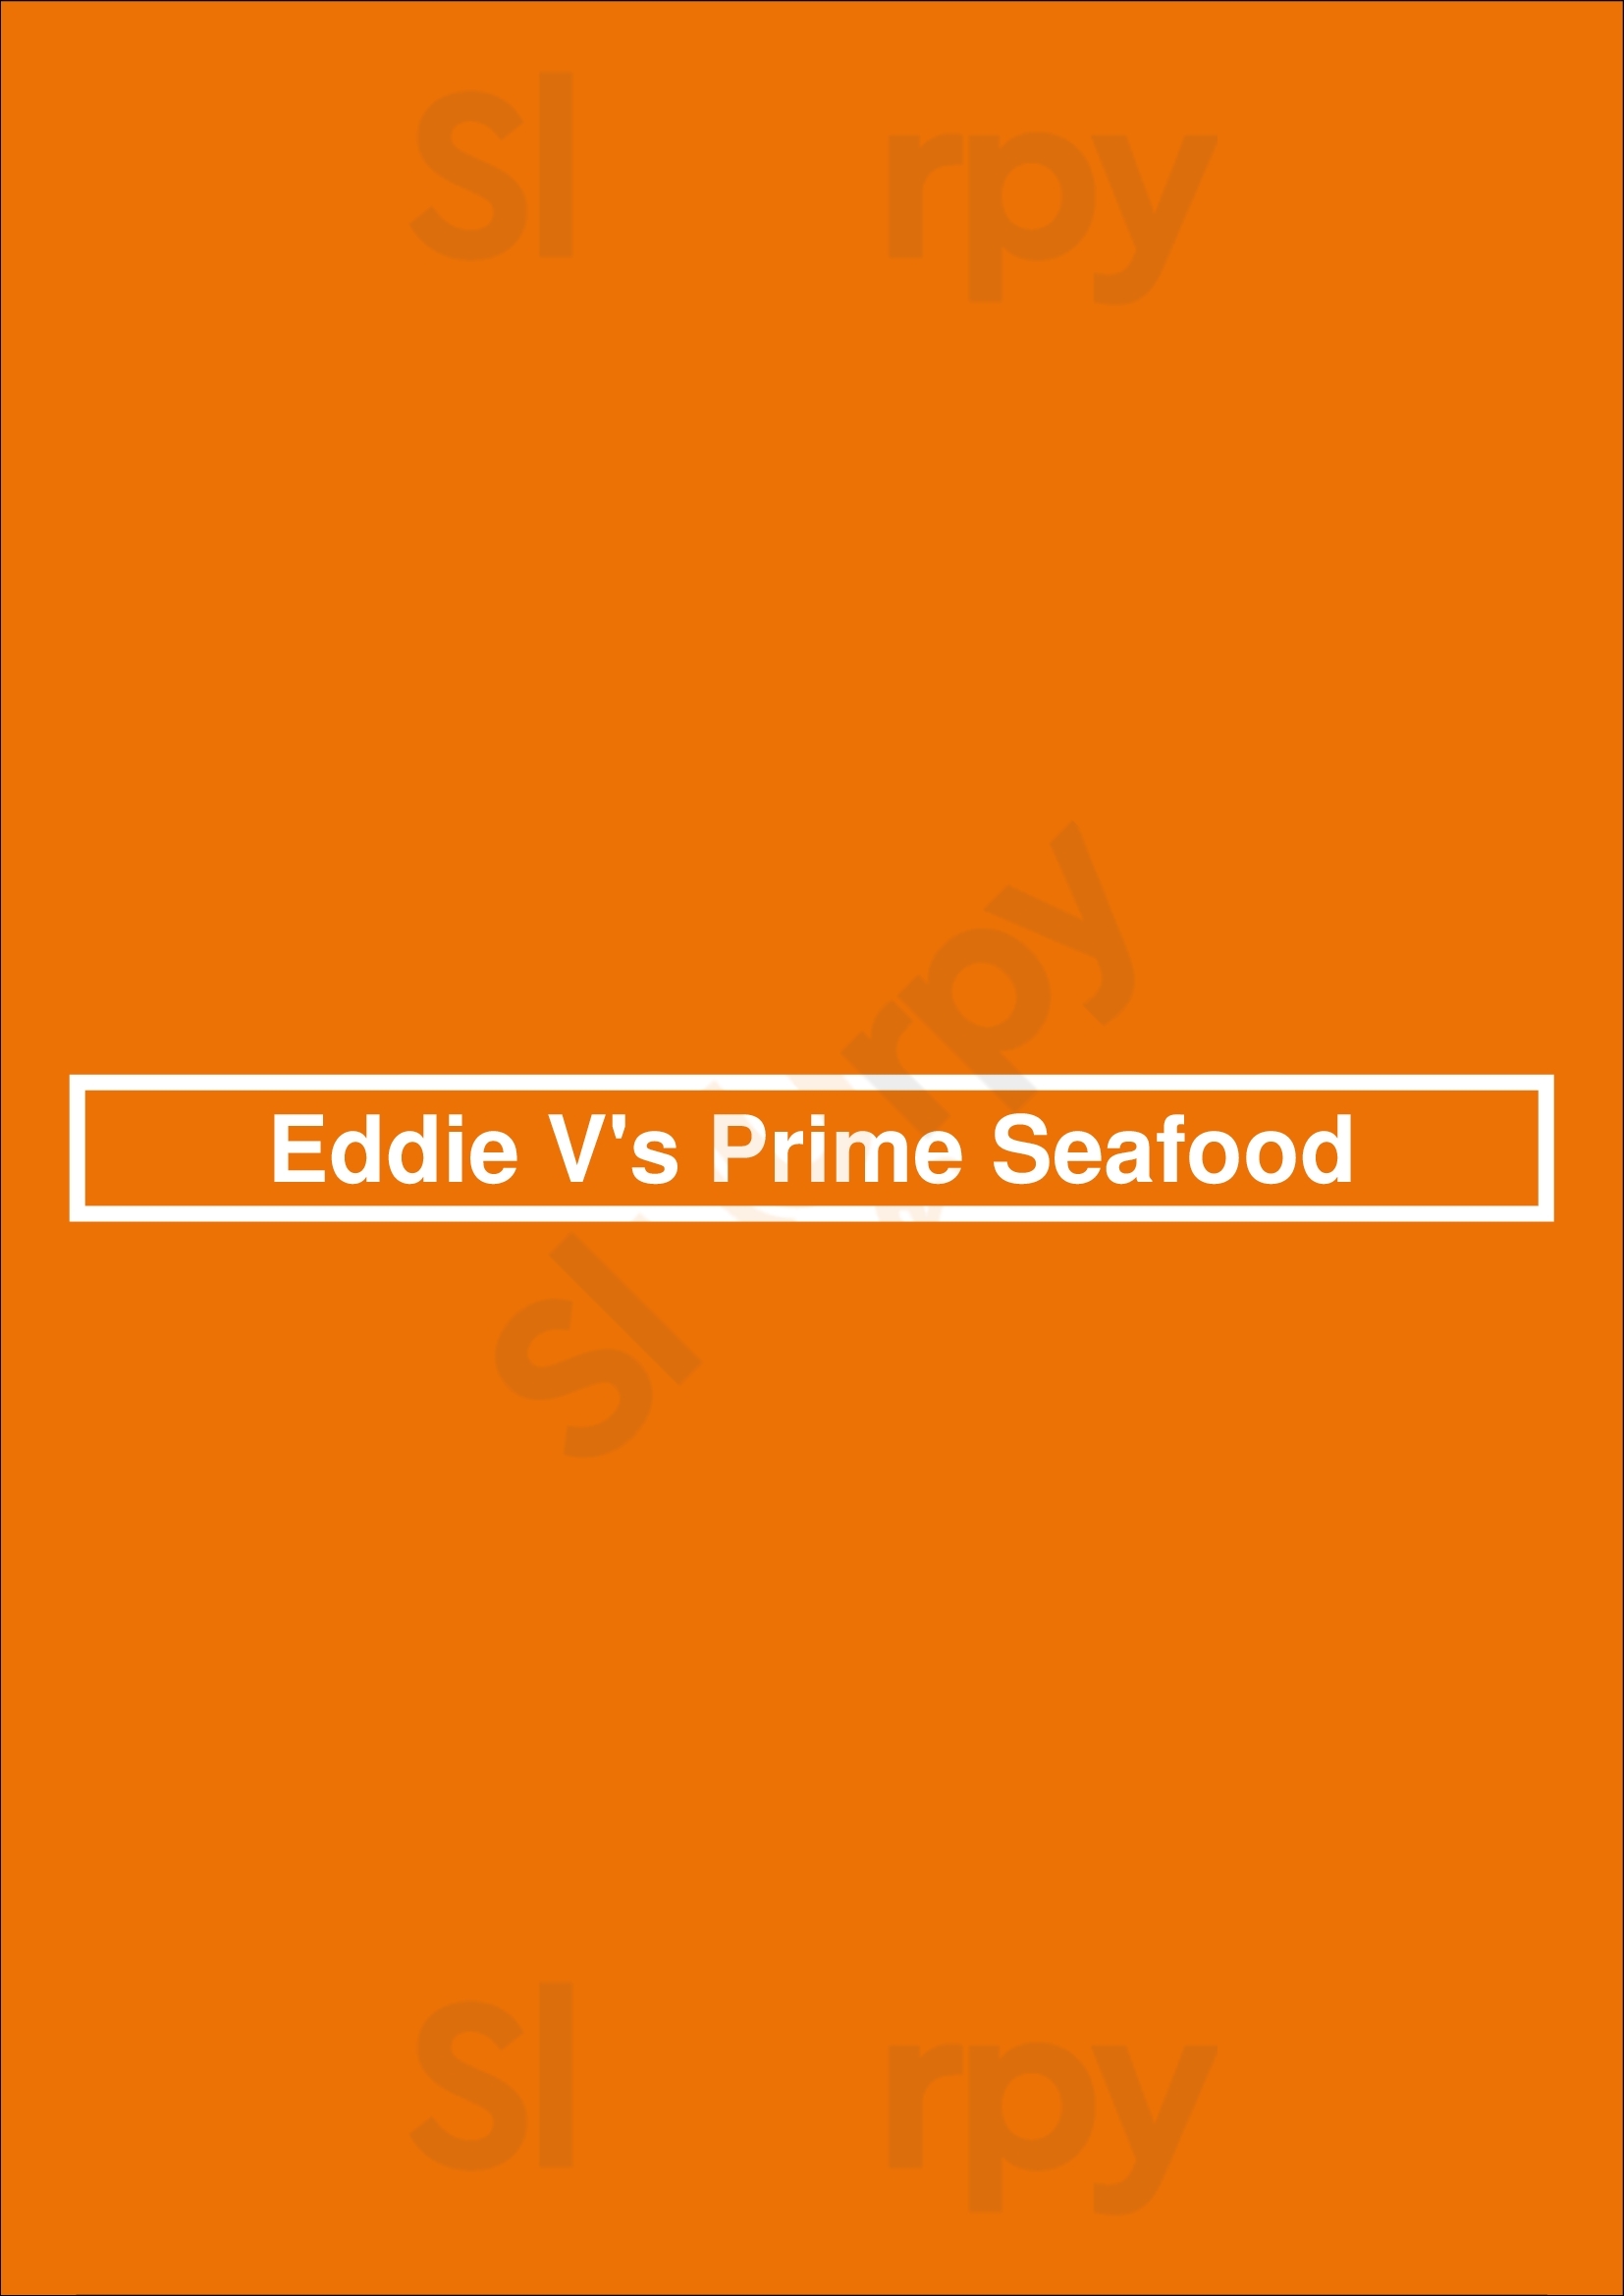 Eddie V's Prime Seafood Houston Menu - 1